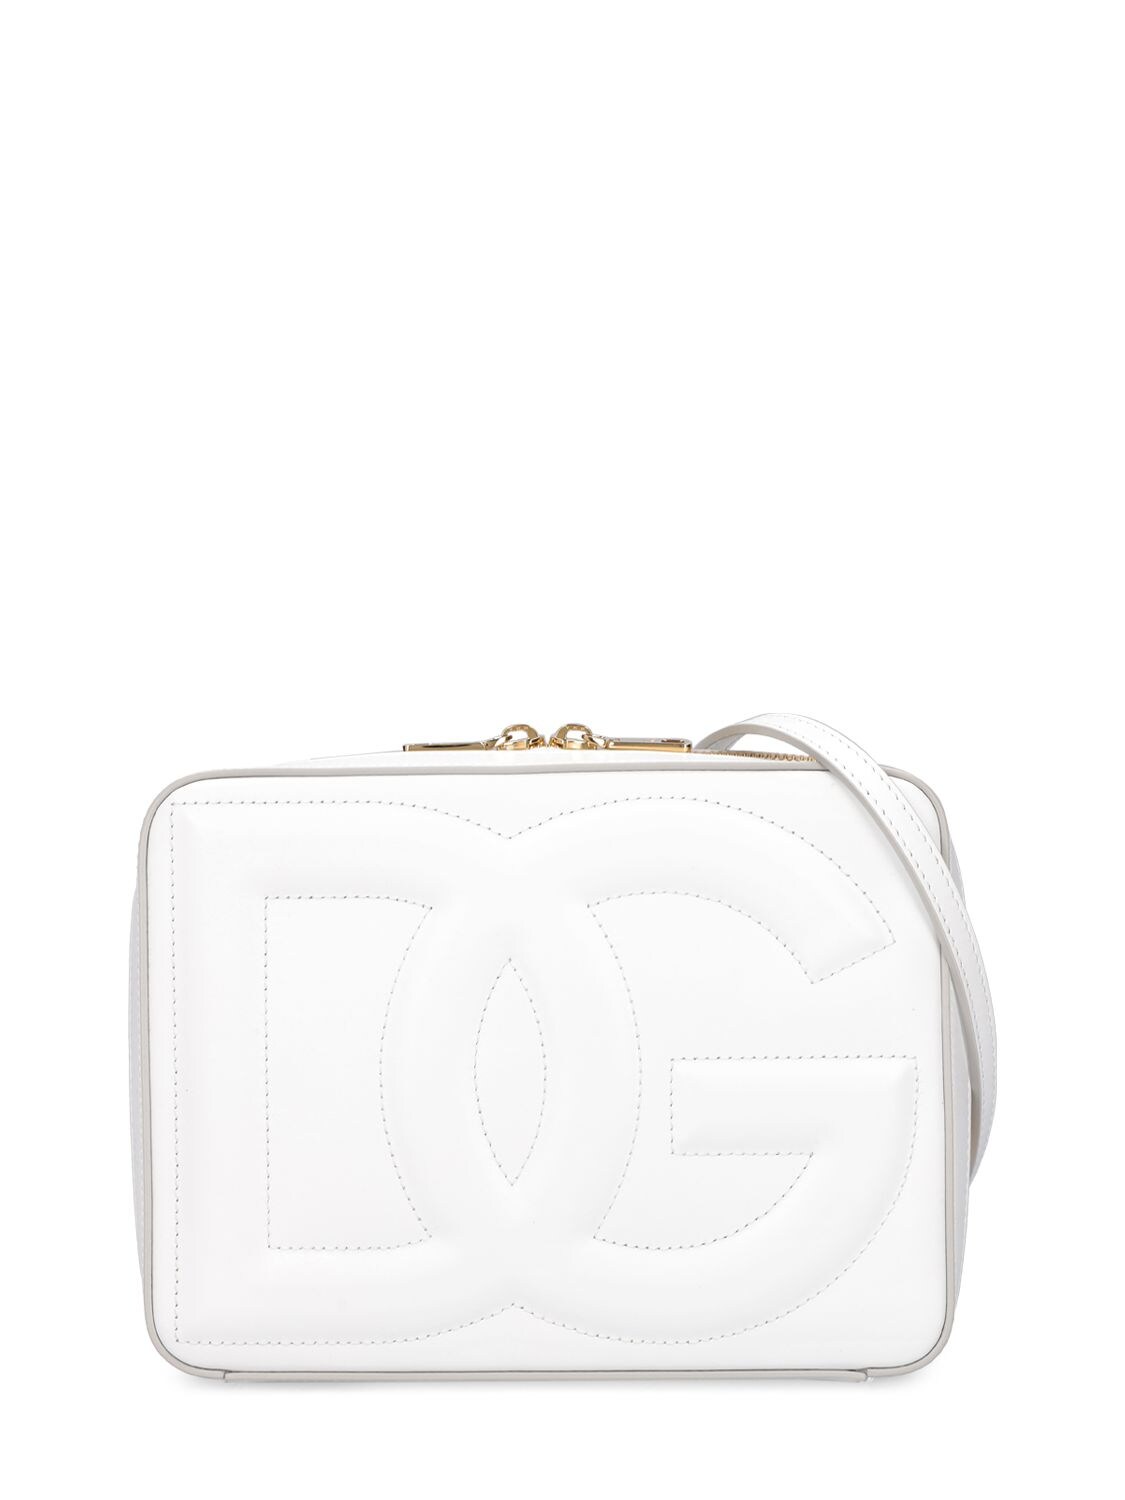 DOLCE & GABBANA Large Logo Leather Camera Bag